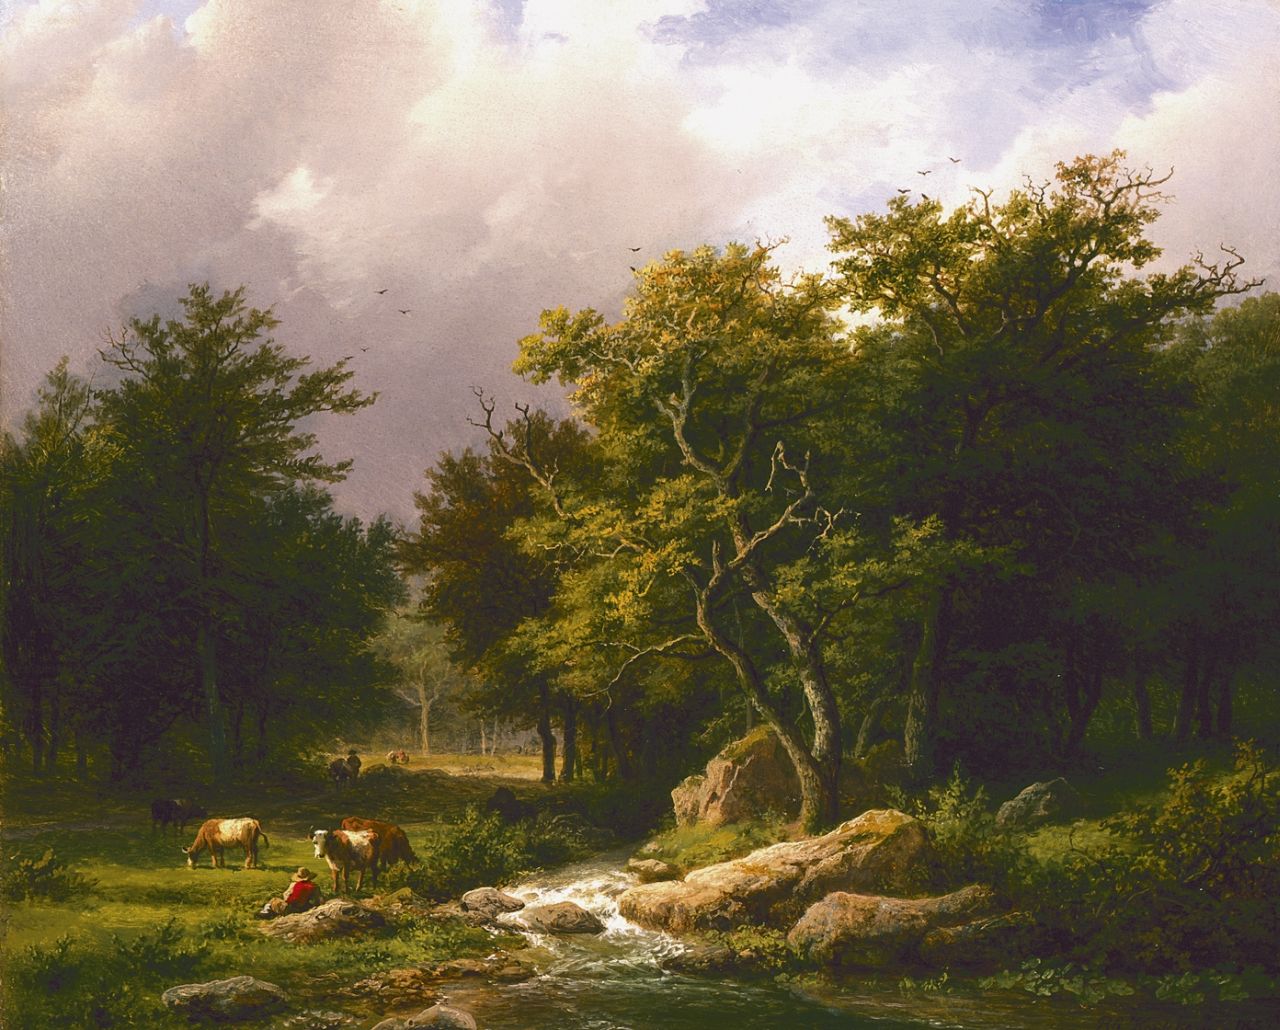 Koekkoek B.C.  | Barend Cornelis Koekkoek, Wooded landscape with cattle, Öl auf Holz 25,3 x 31,2 cm, signed l.r.